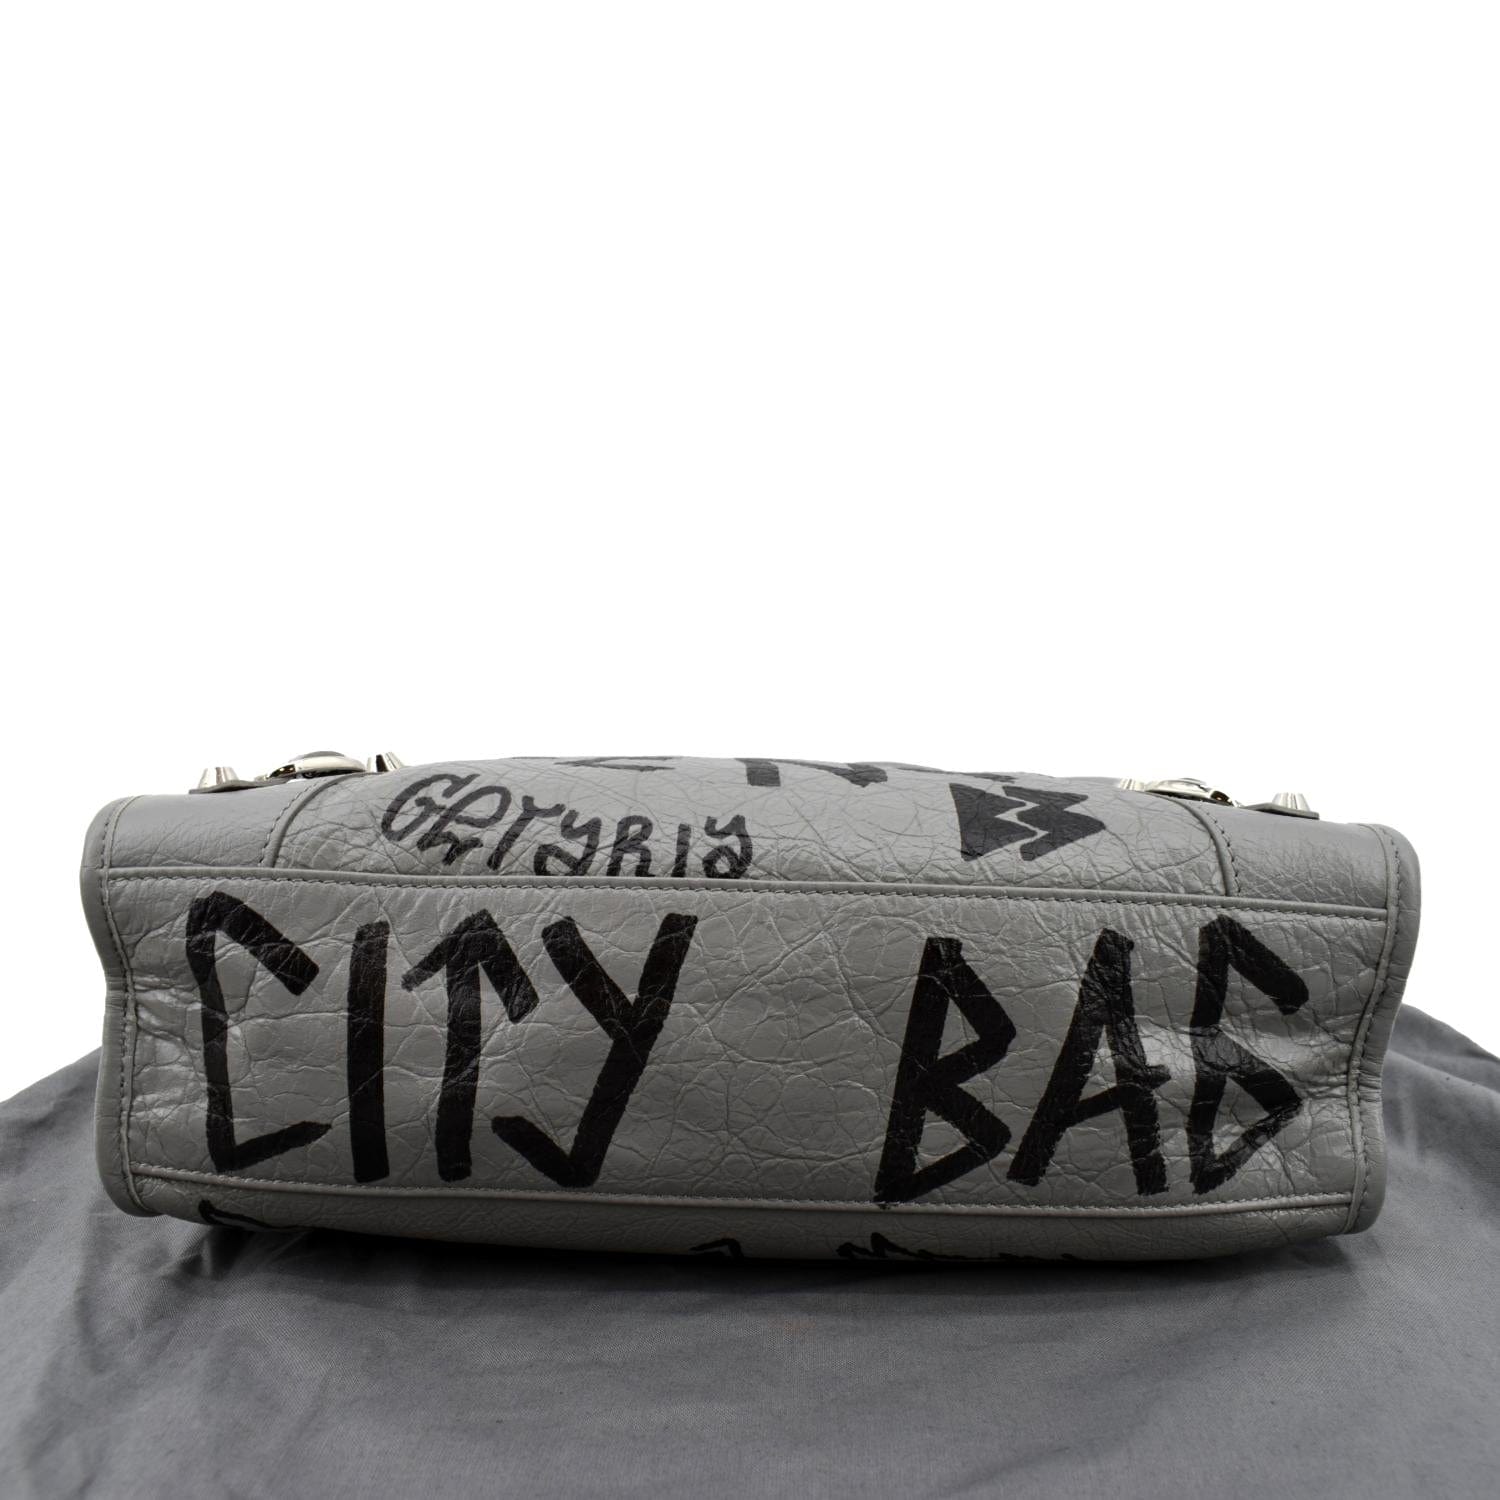 Balenciaga Classic City Graffiti Bag in Black